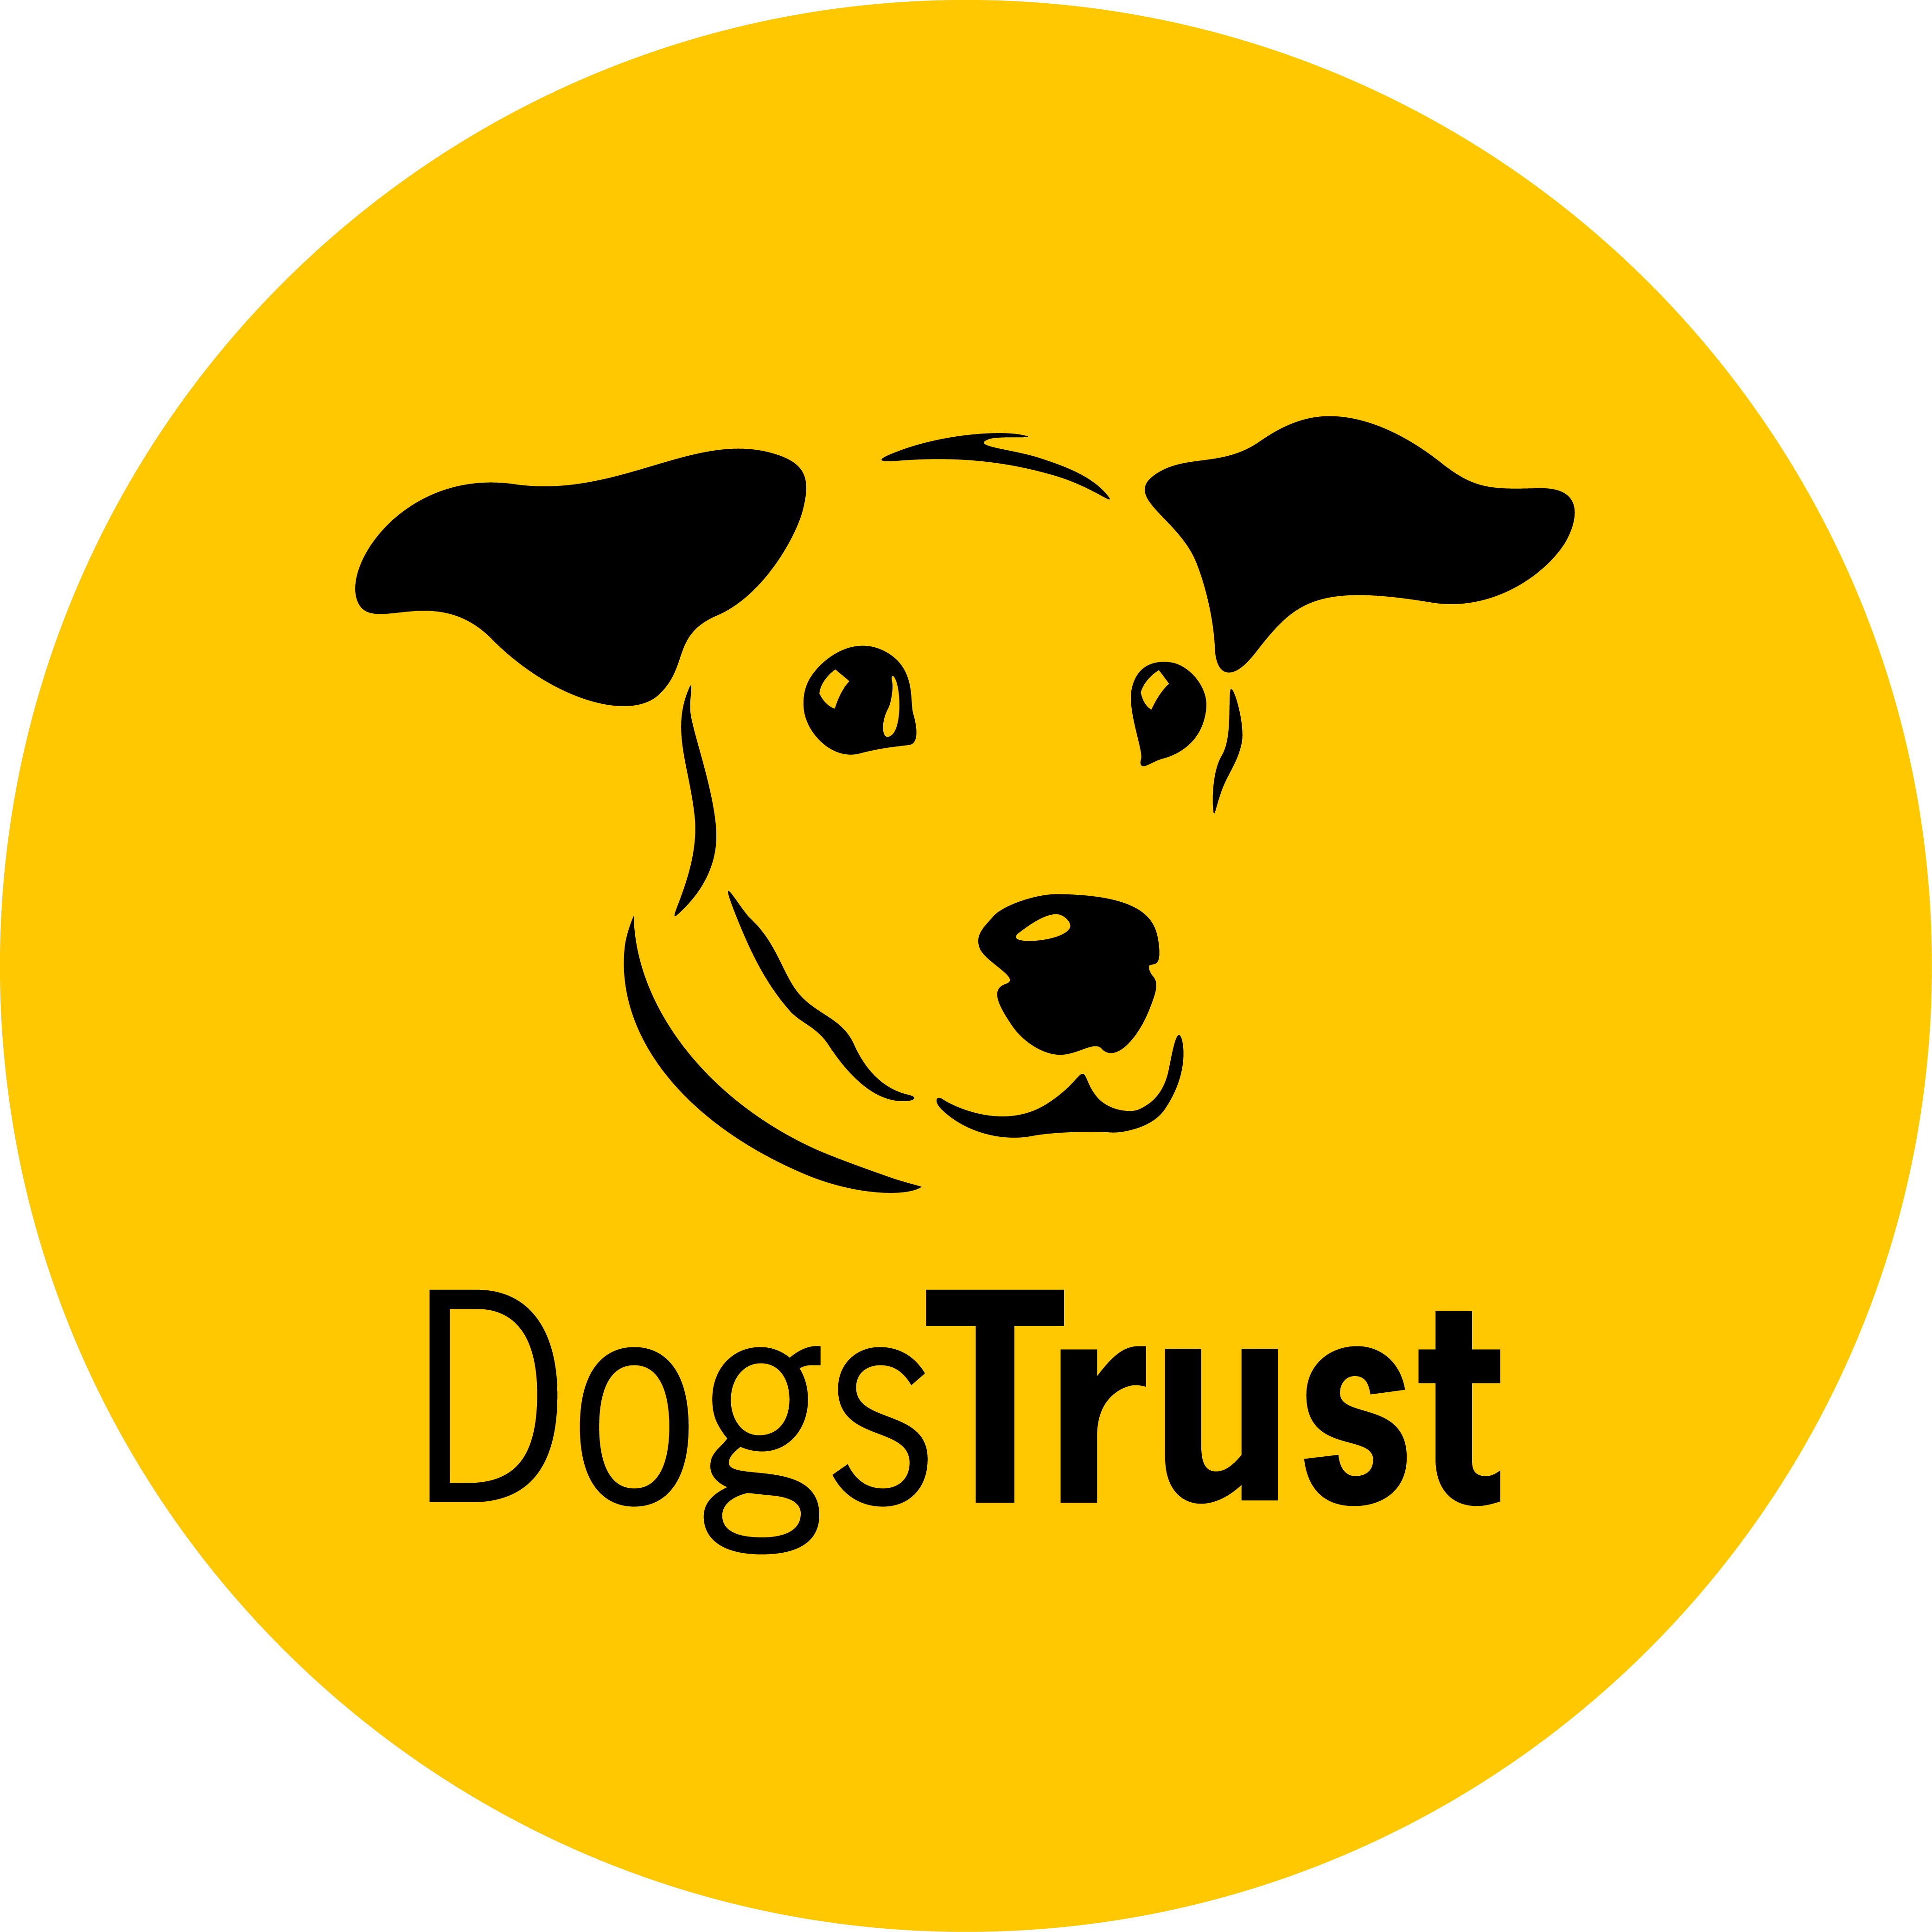 Dogs Trust Logo Rgb1